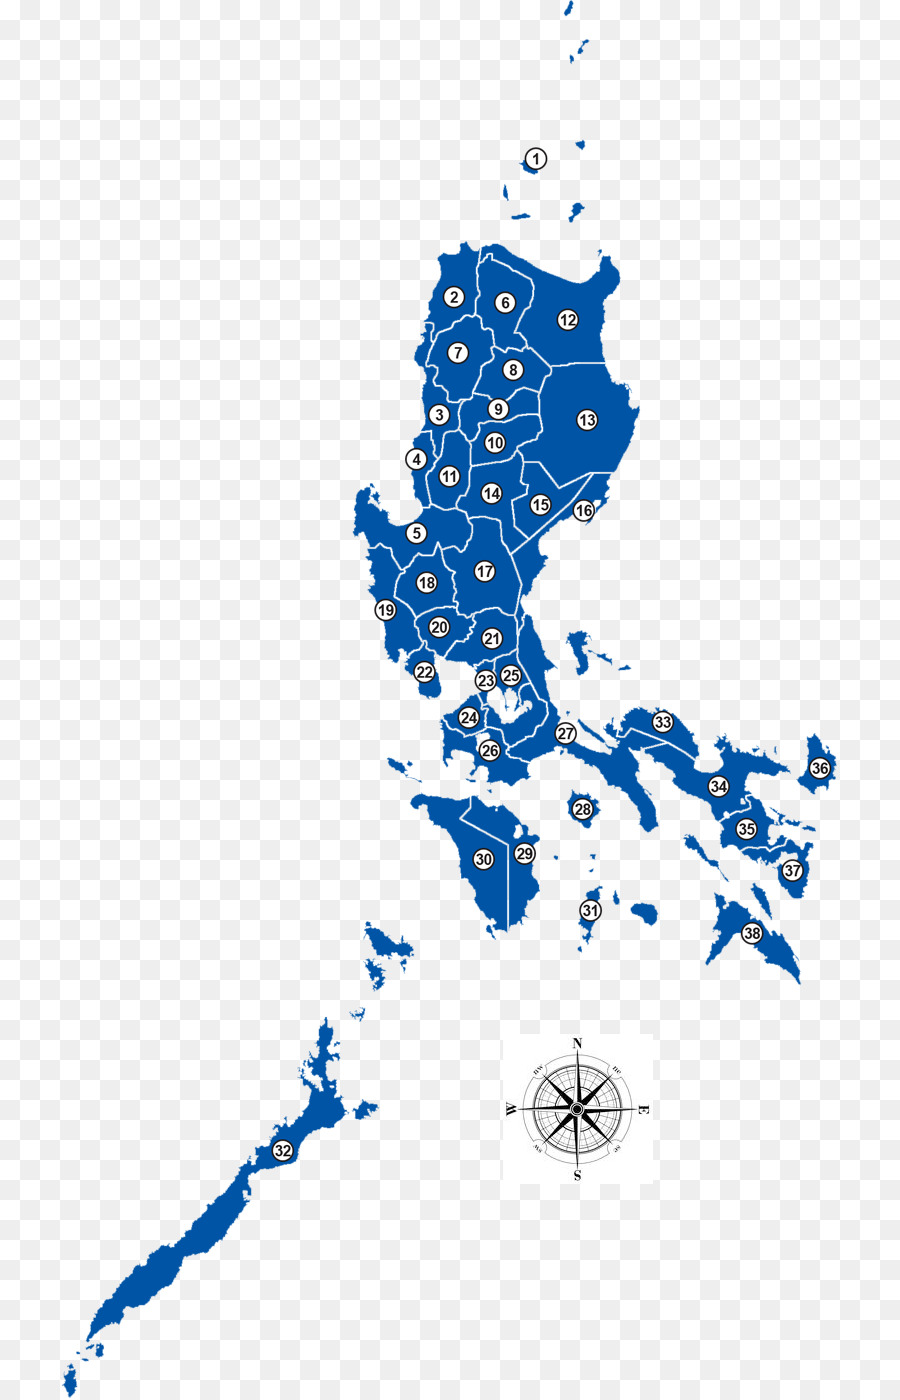 Chính Commons - Philippines